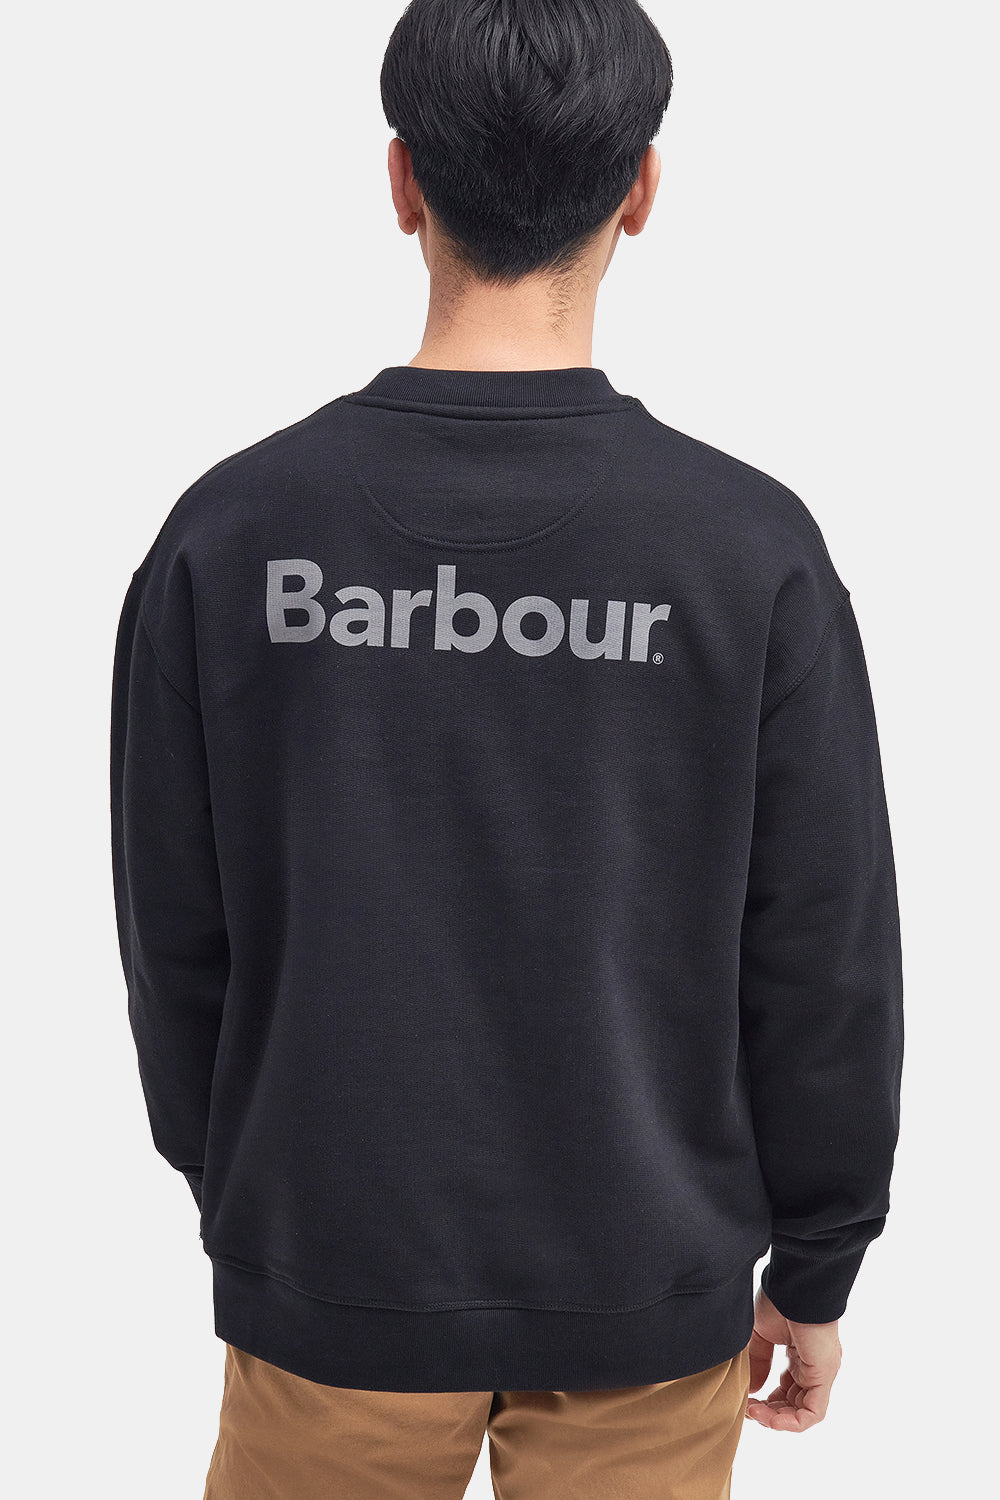 Barbour Nicholas Crew Sweatshirt (Black) Back